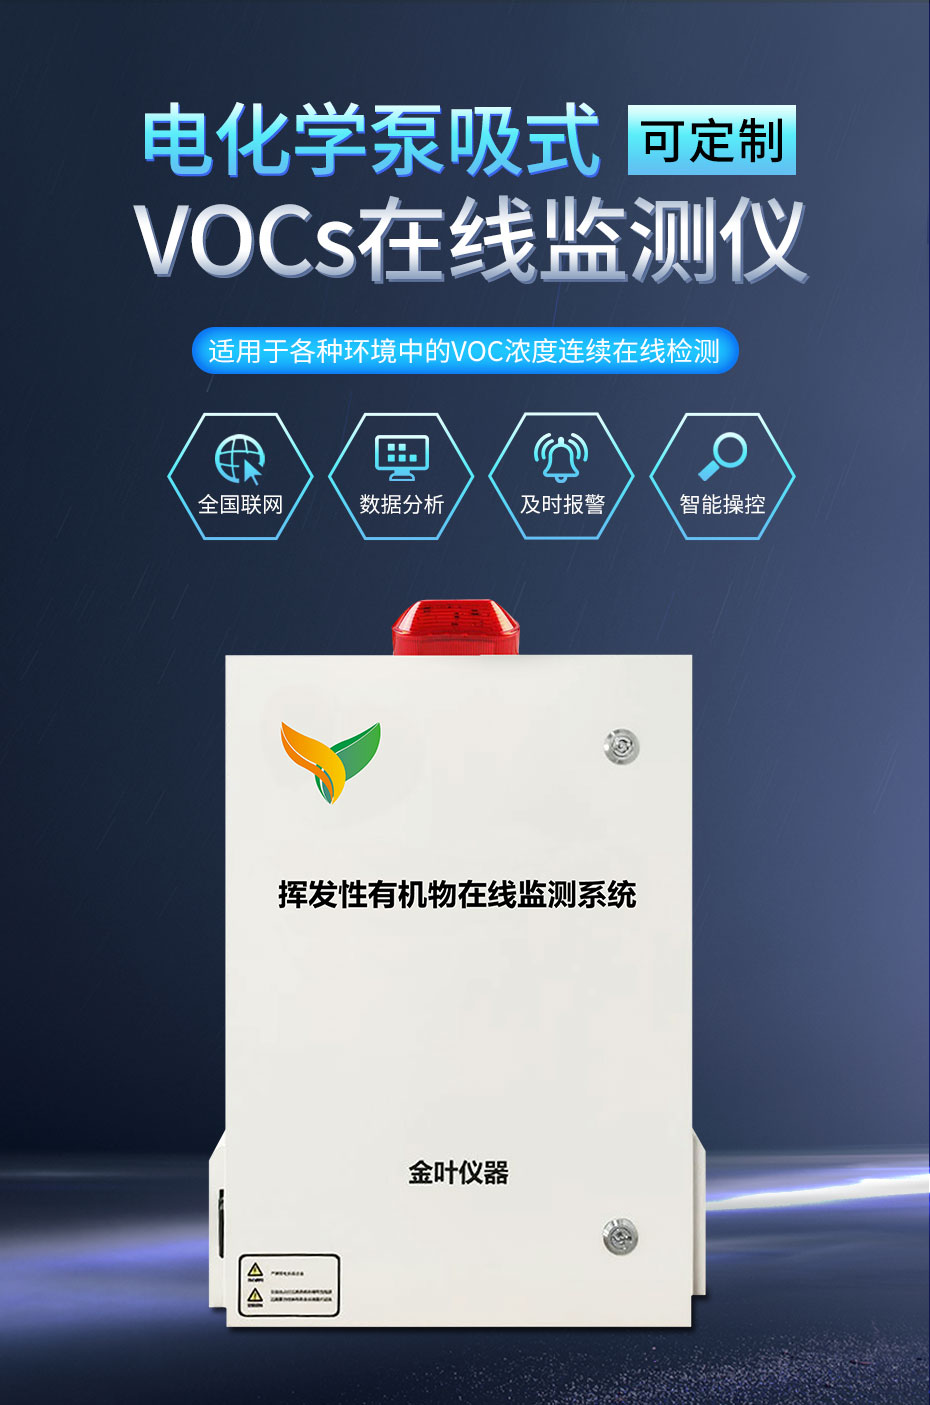 vocs在线监测设备在各厂区的应用